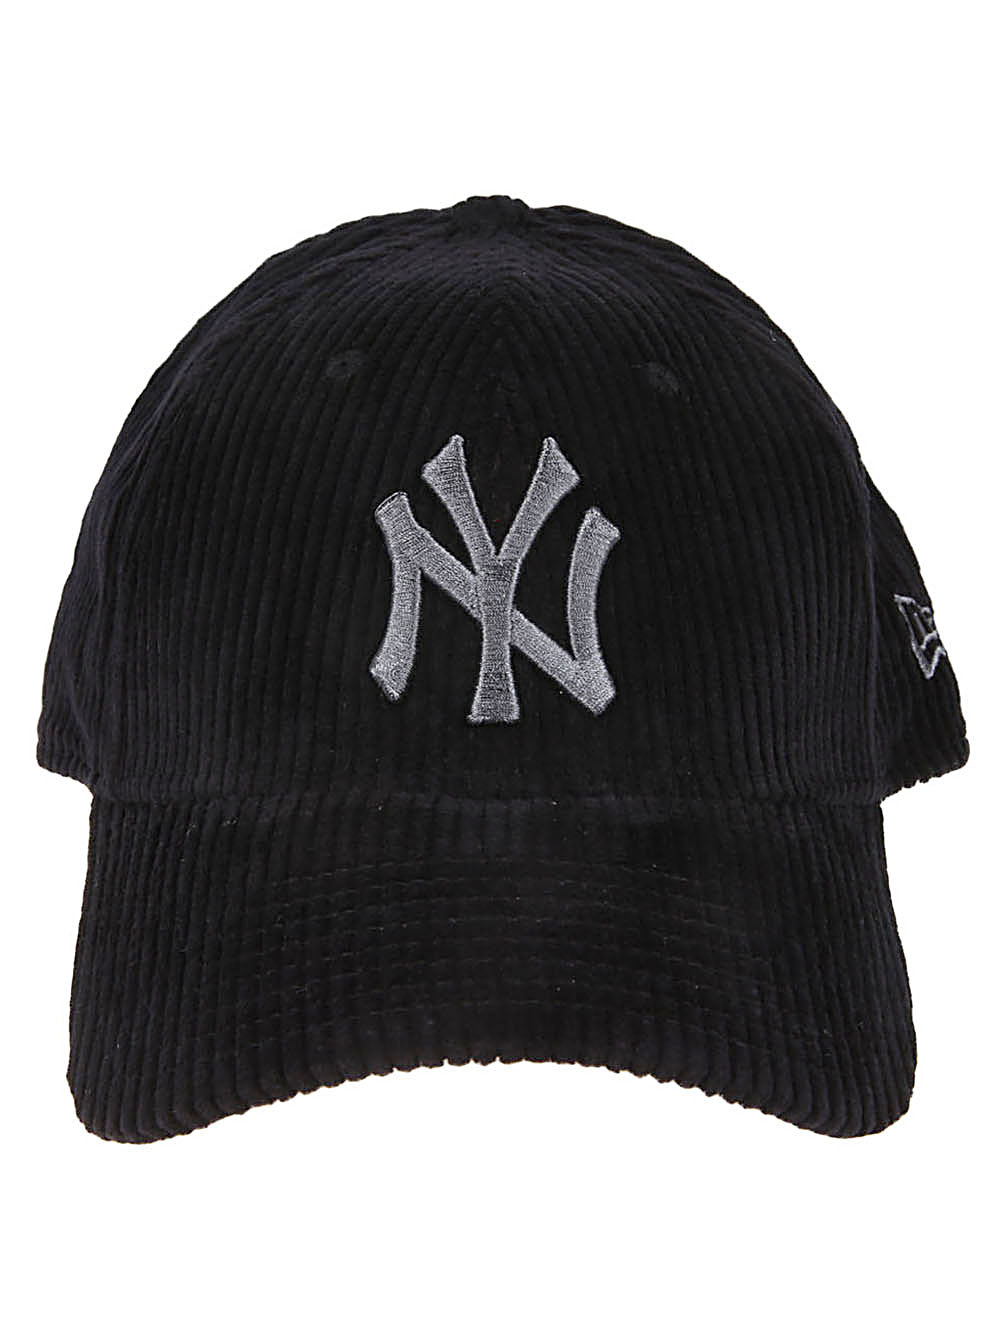 New Era Hats Black